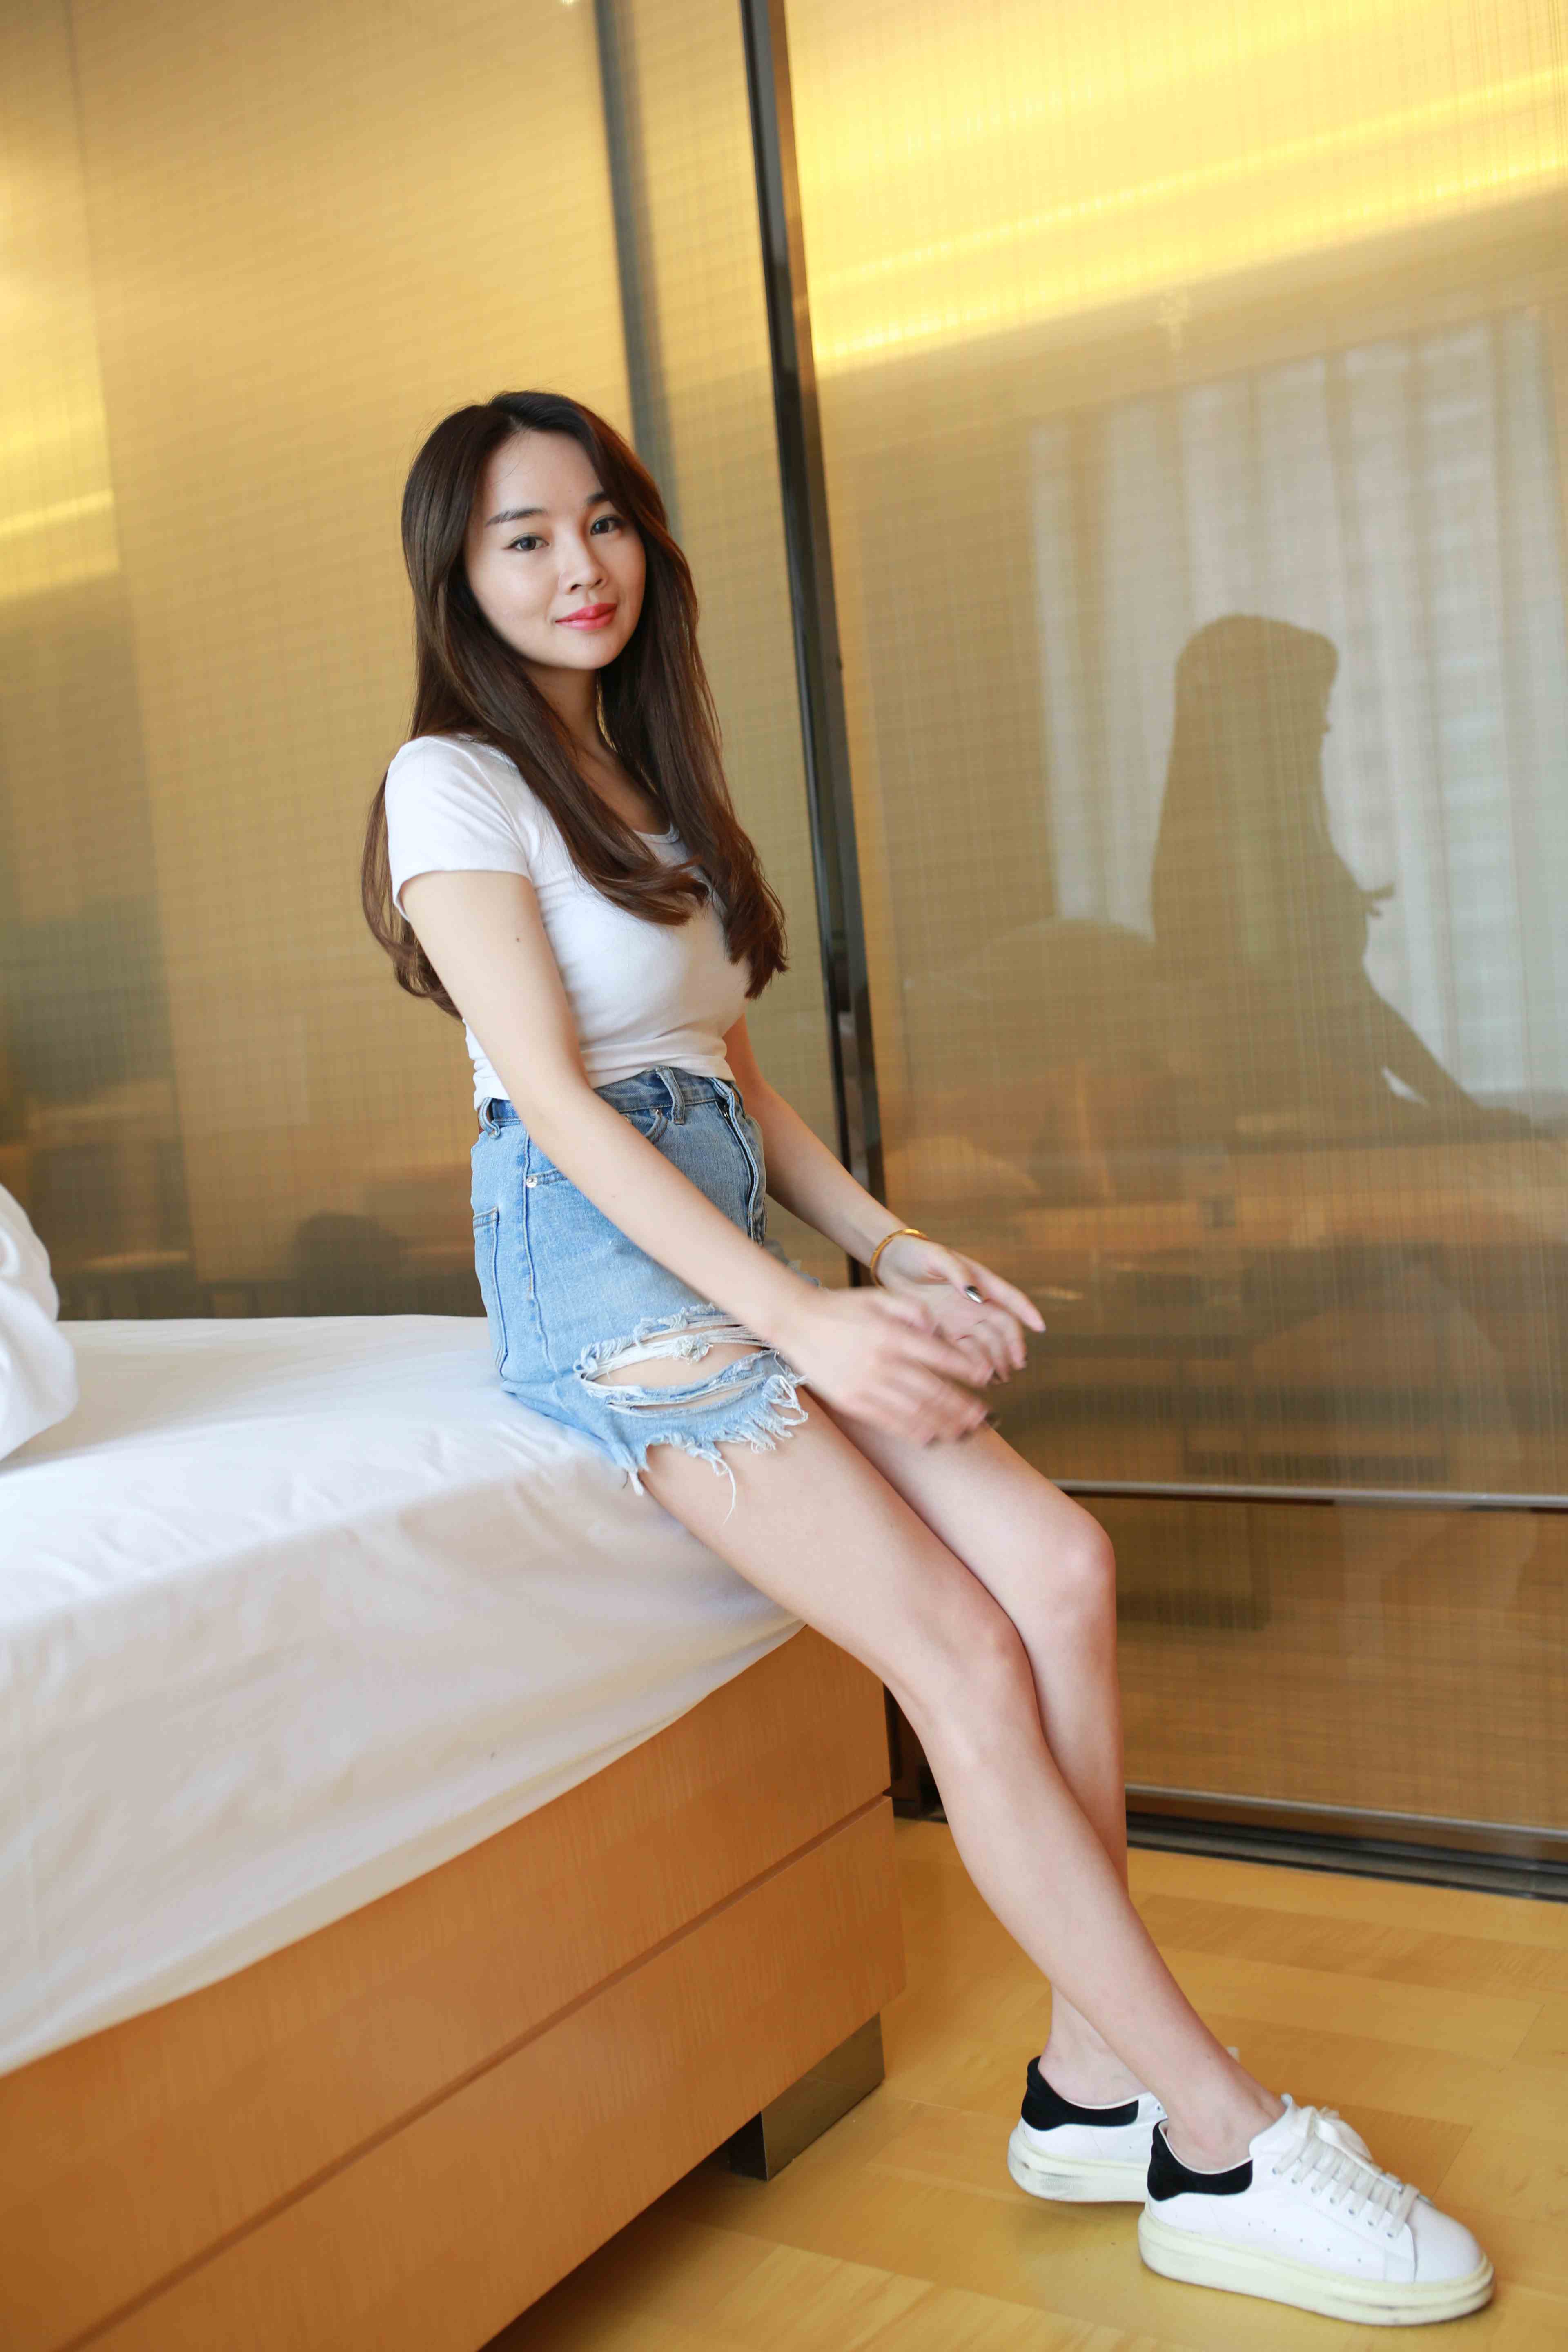 China Beauty Legs and feet 705